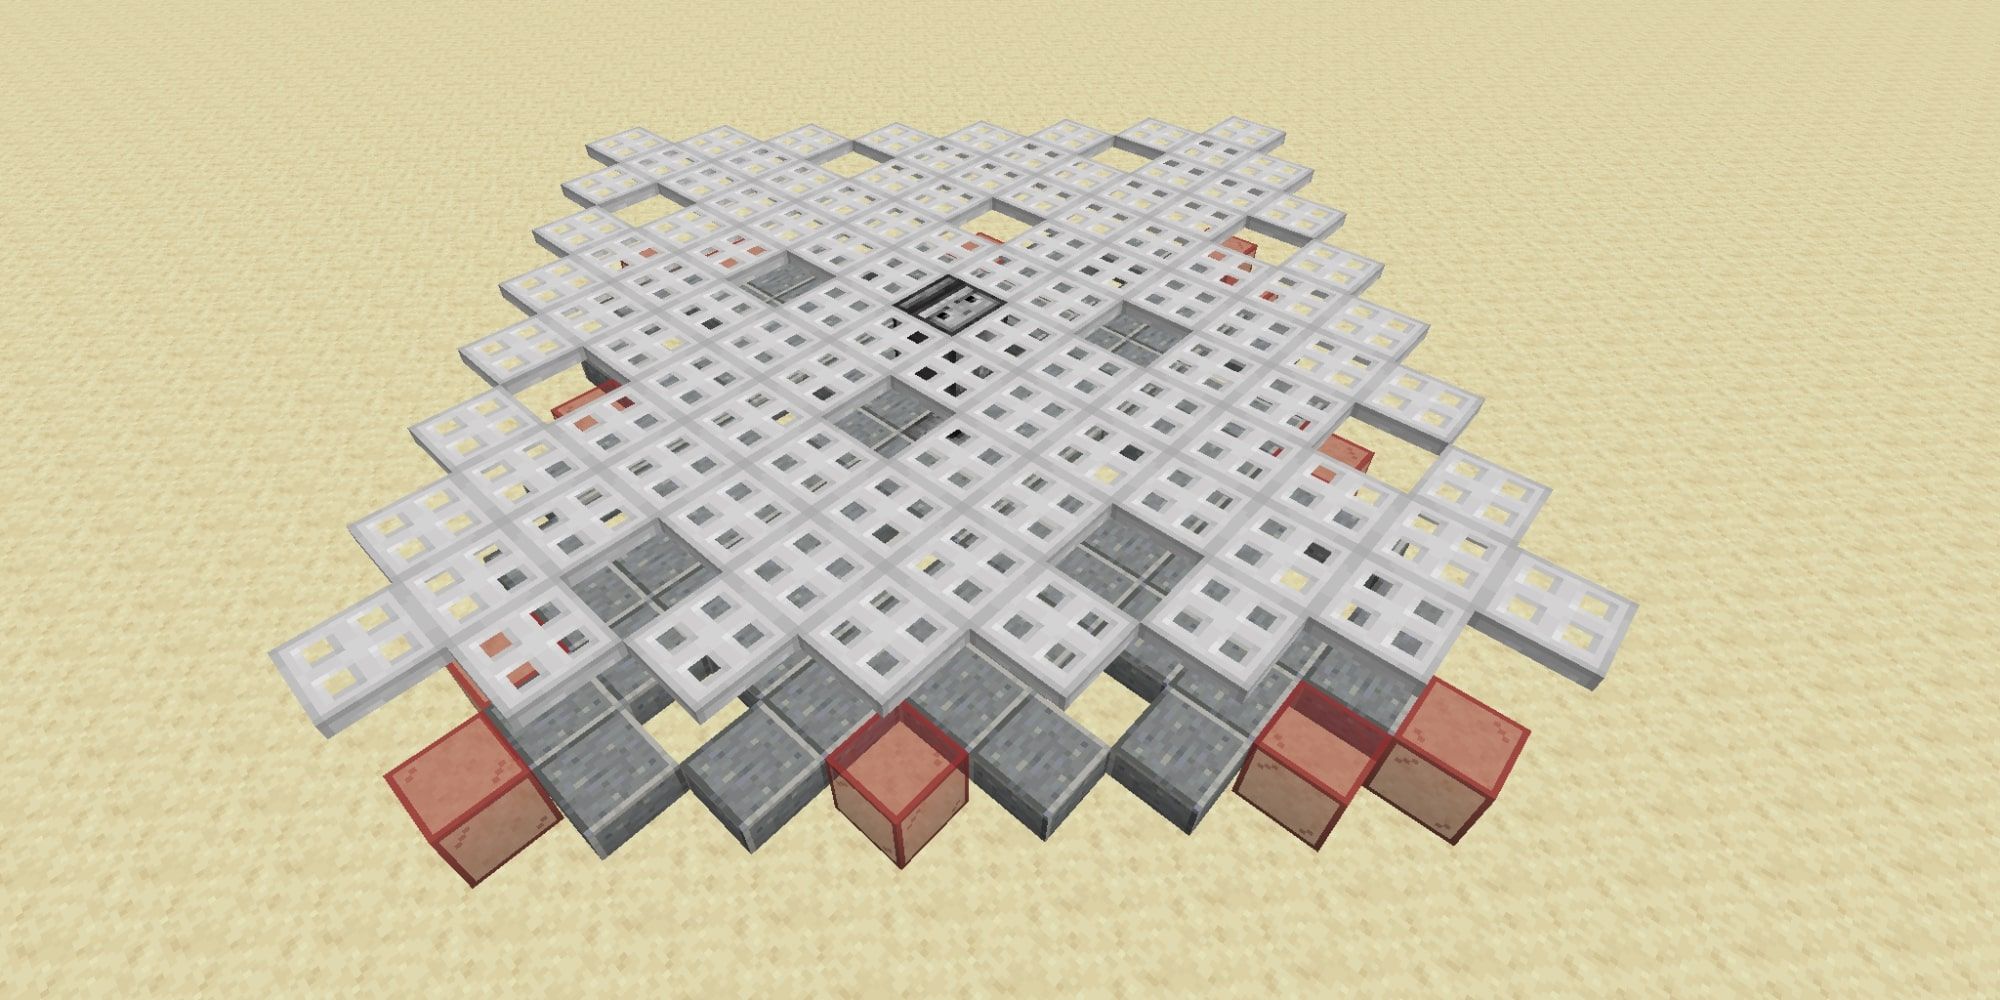 Minecraft How To Build A Creeper Farm To Get Gunpowder